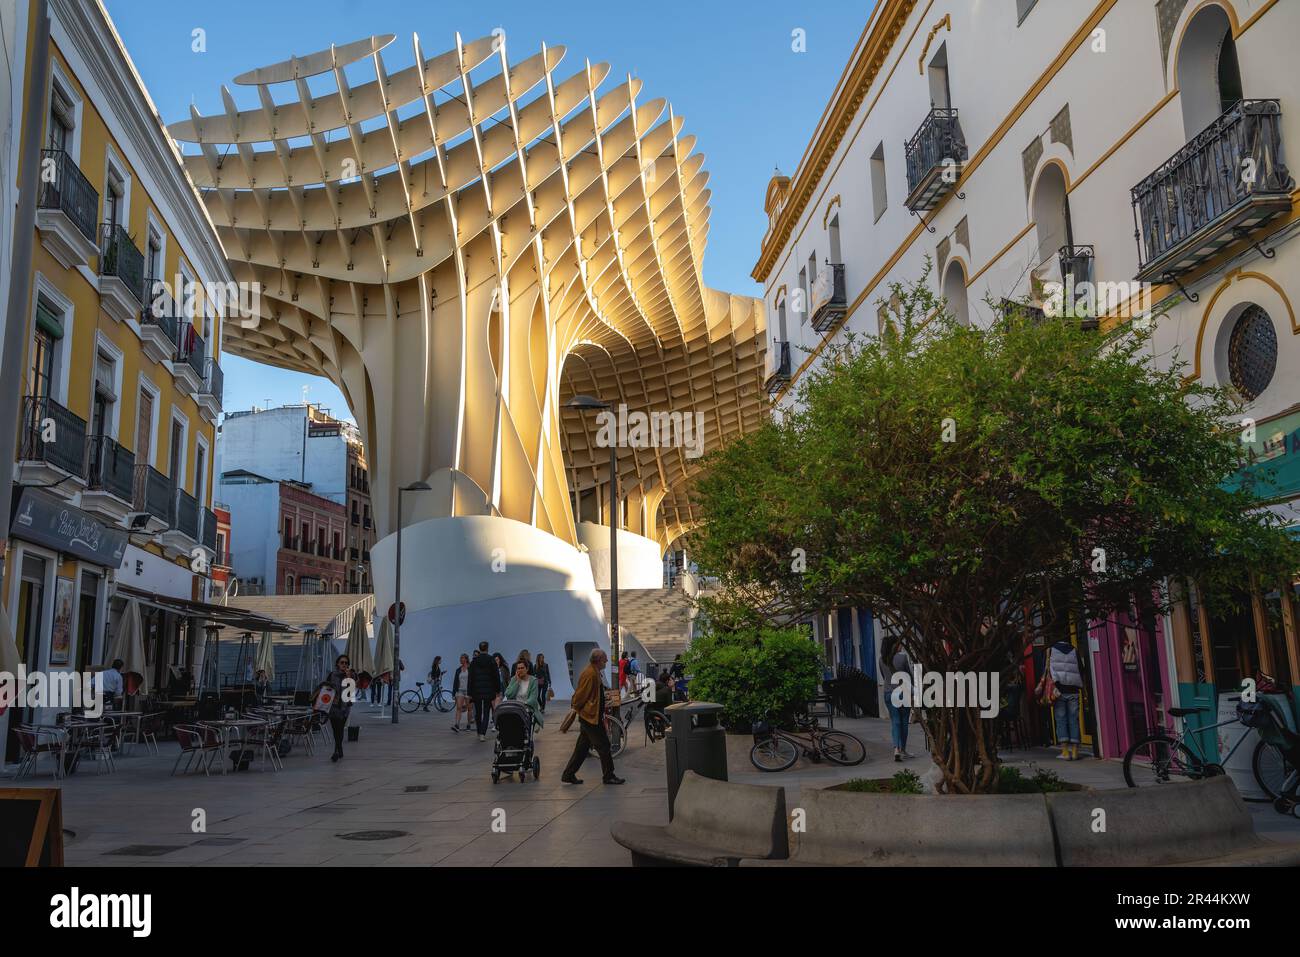 Las Setas de Sevilla at Plaza de la Encarnacion Square - Seville, Andalusia, Spain Stock Photo